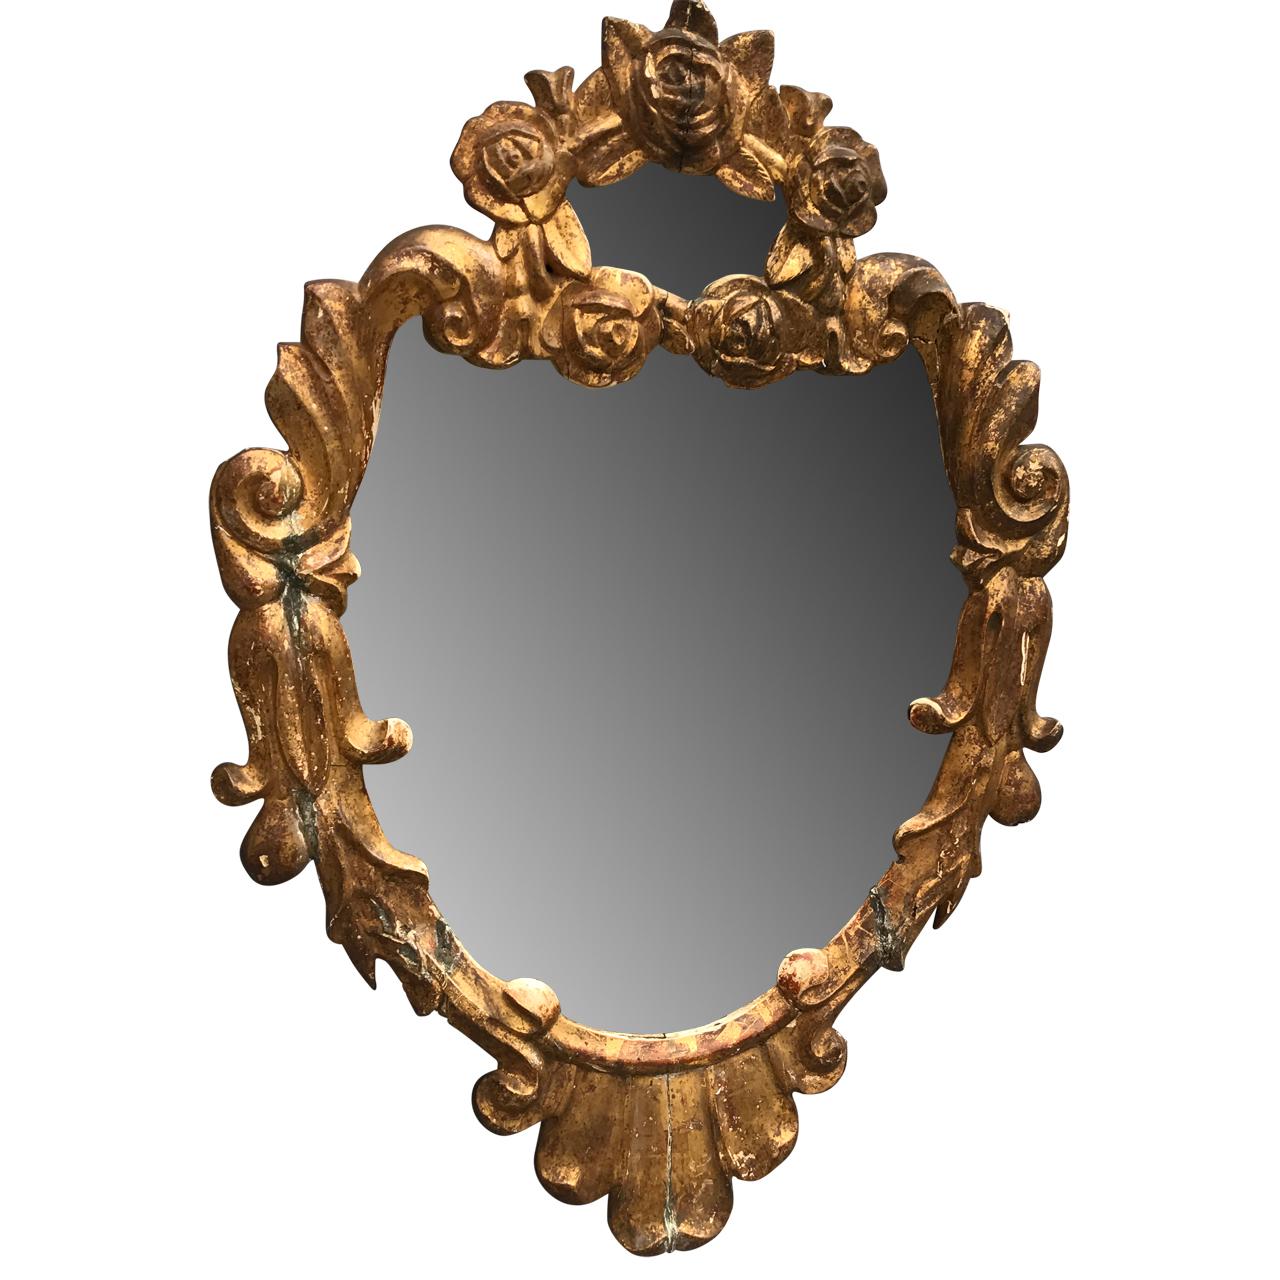 Small 19th century Italian gold-leaf gilded wall mirror.